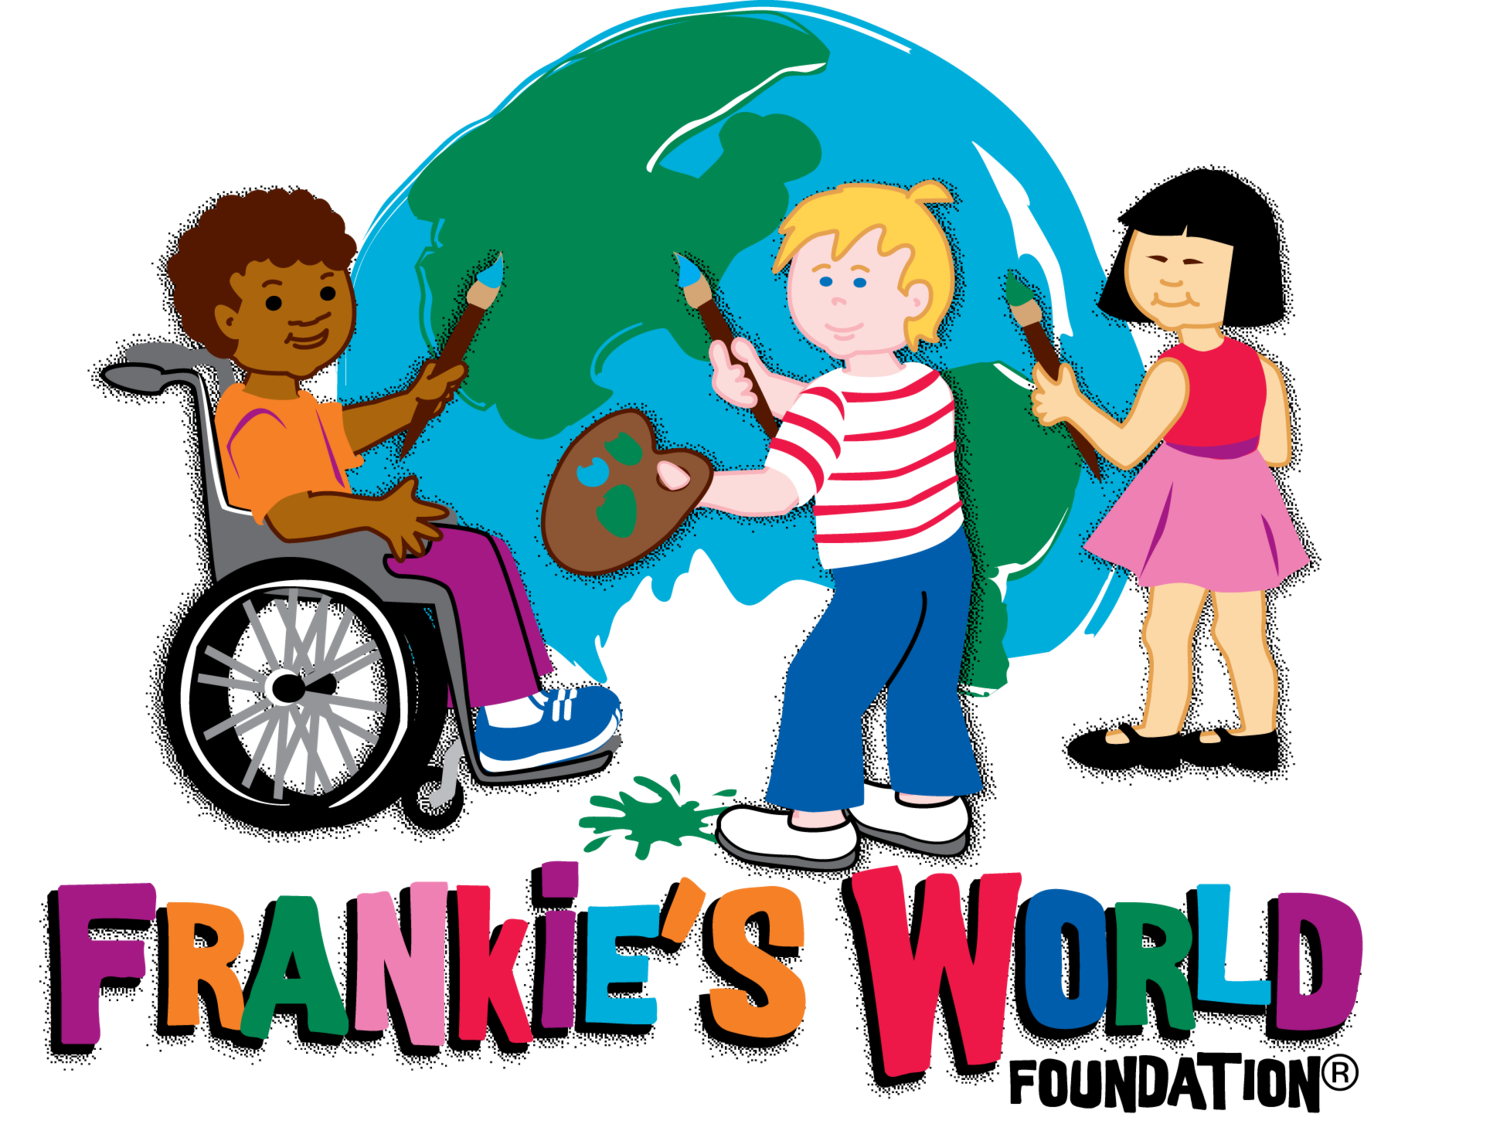 Frankie's World is Philadelphia's Leading Medical Day Care Provider